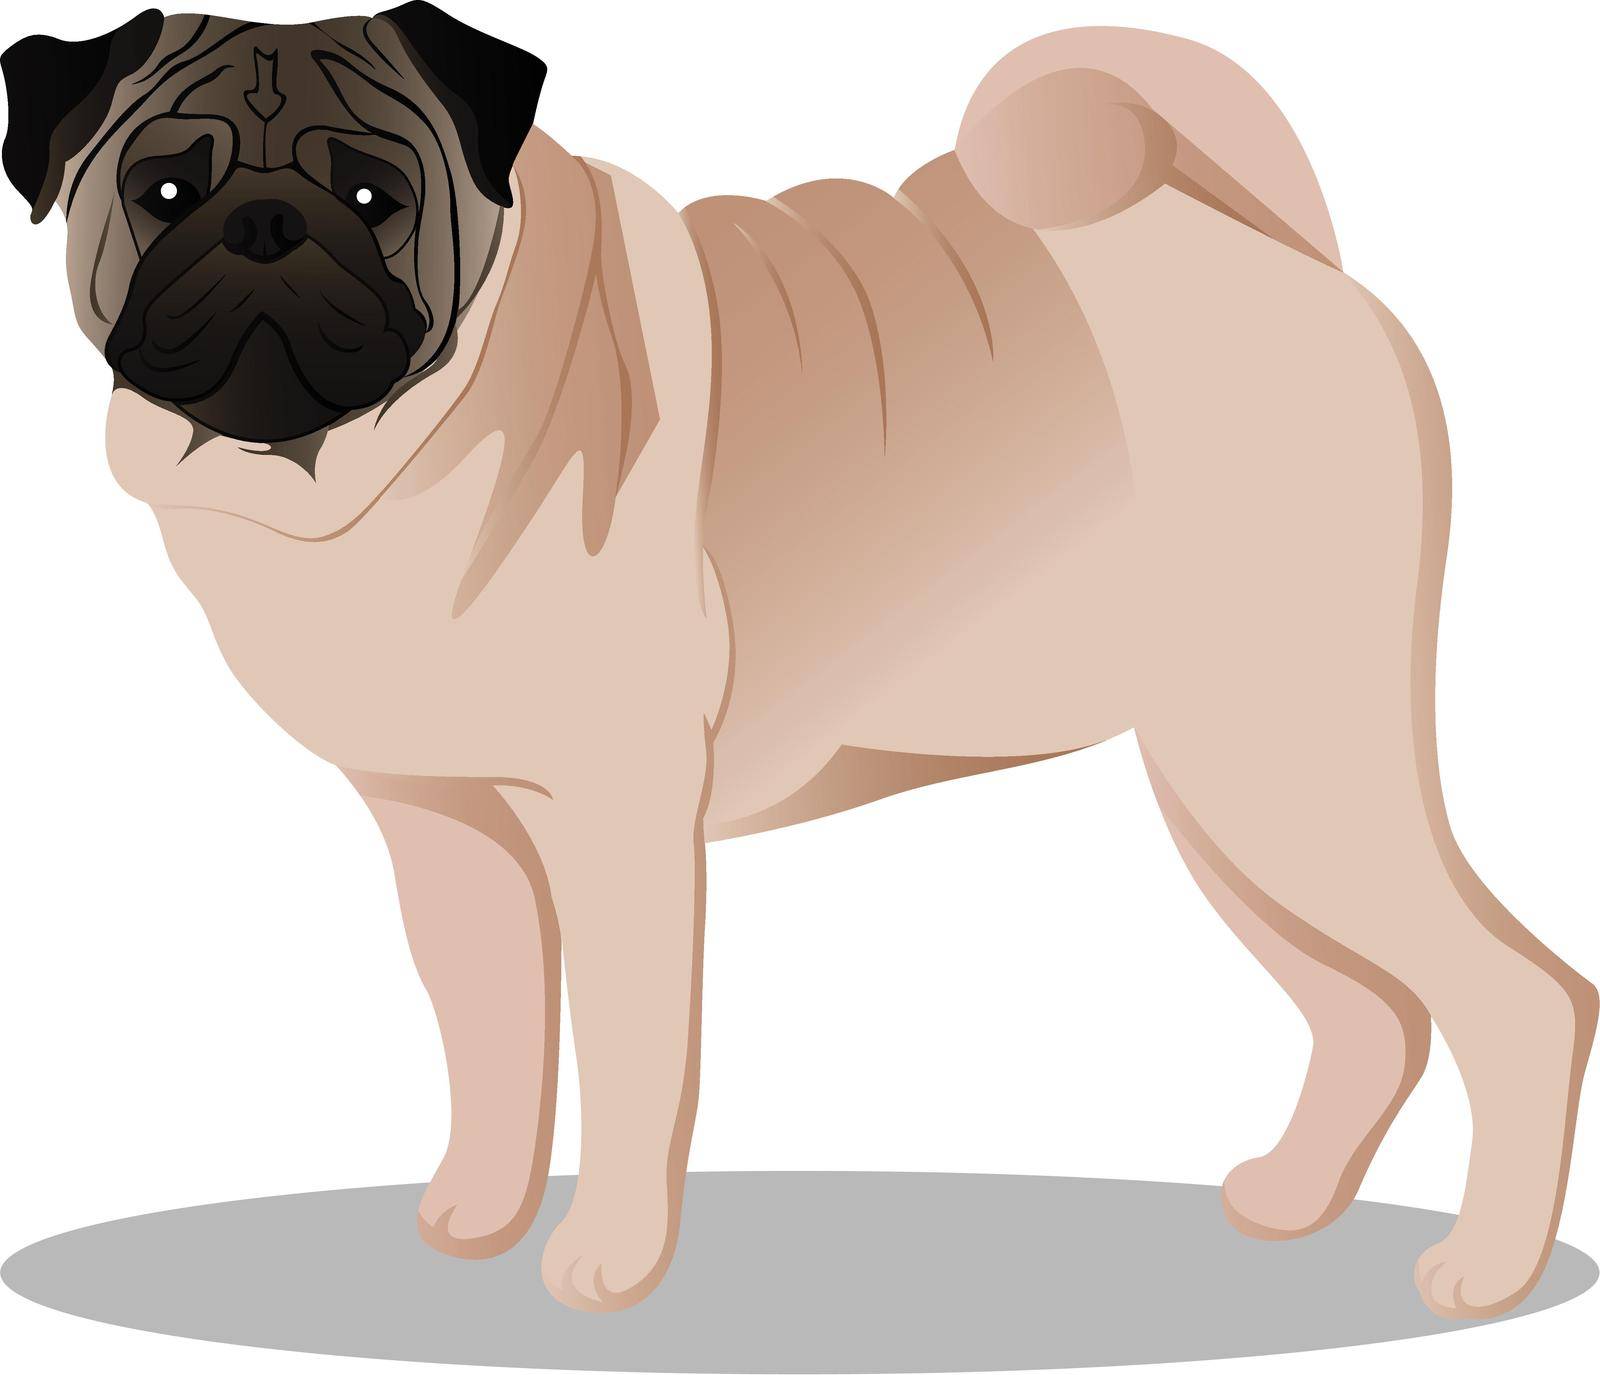 Pug dog vector illustration